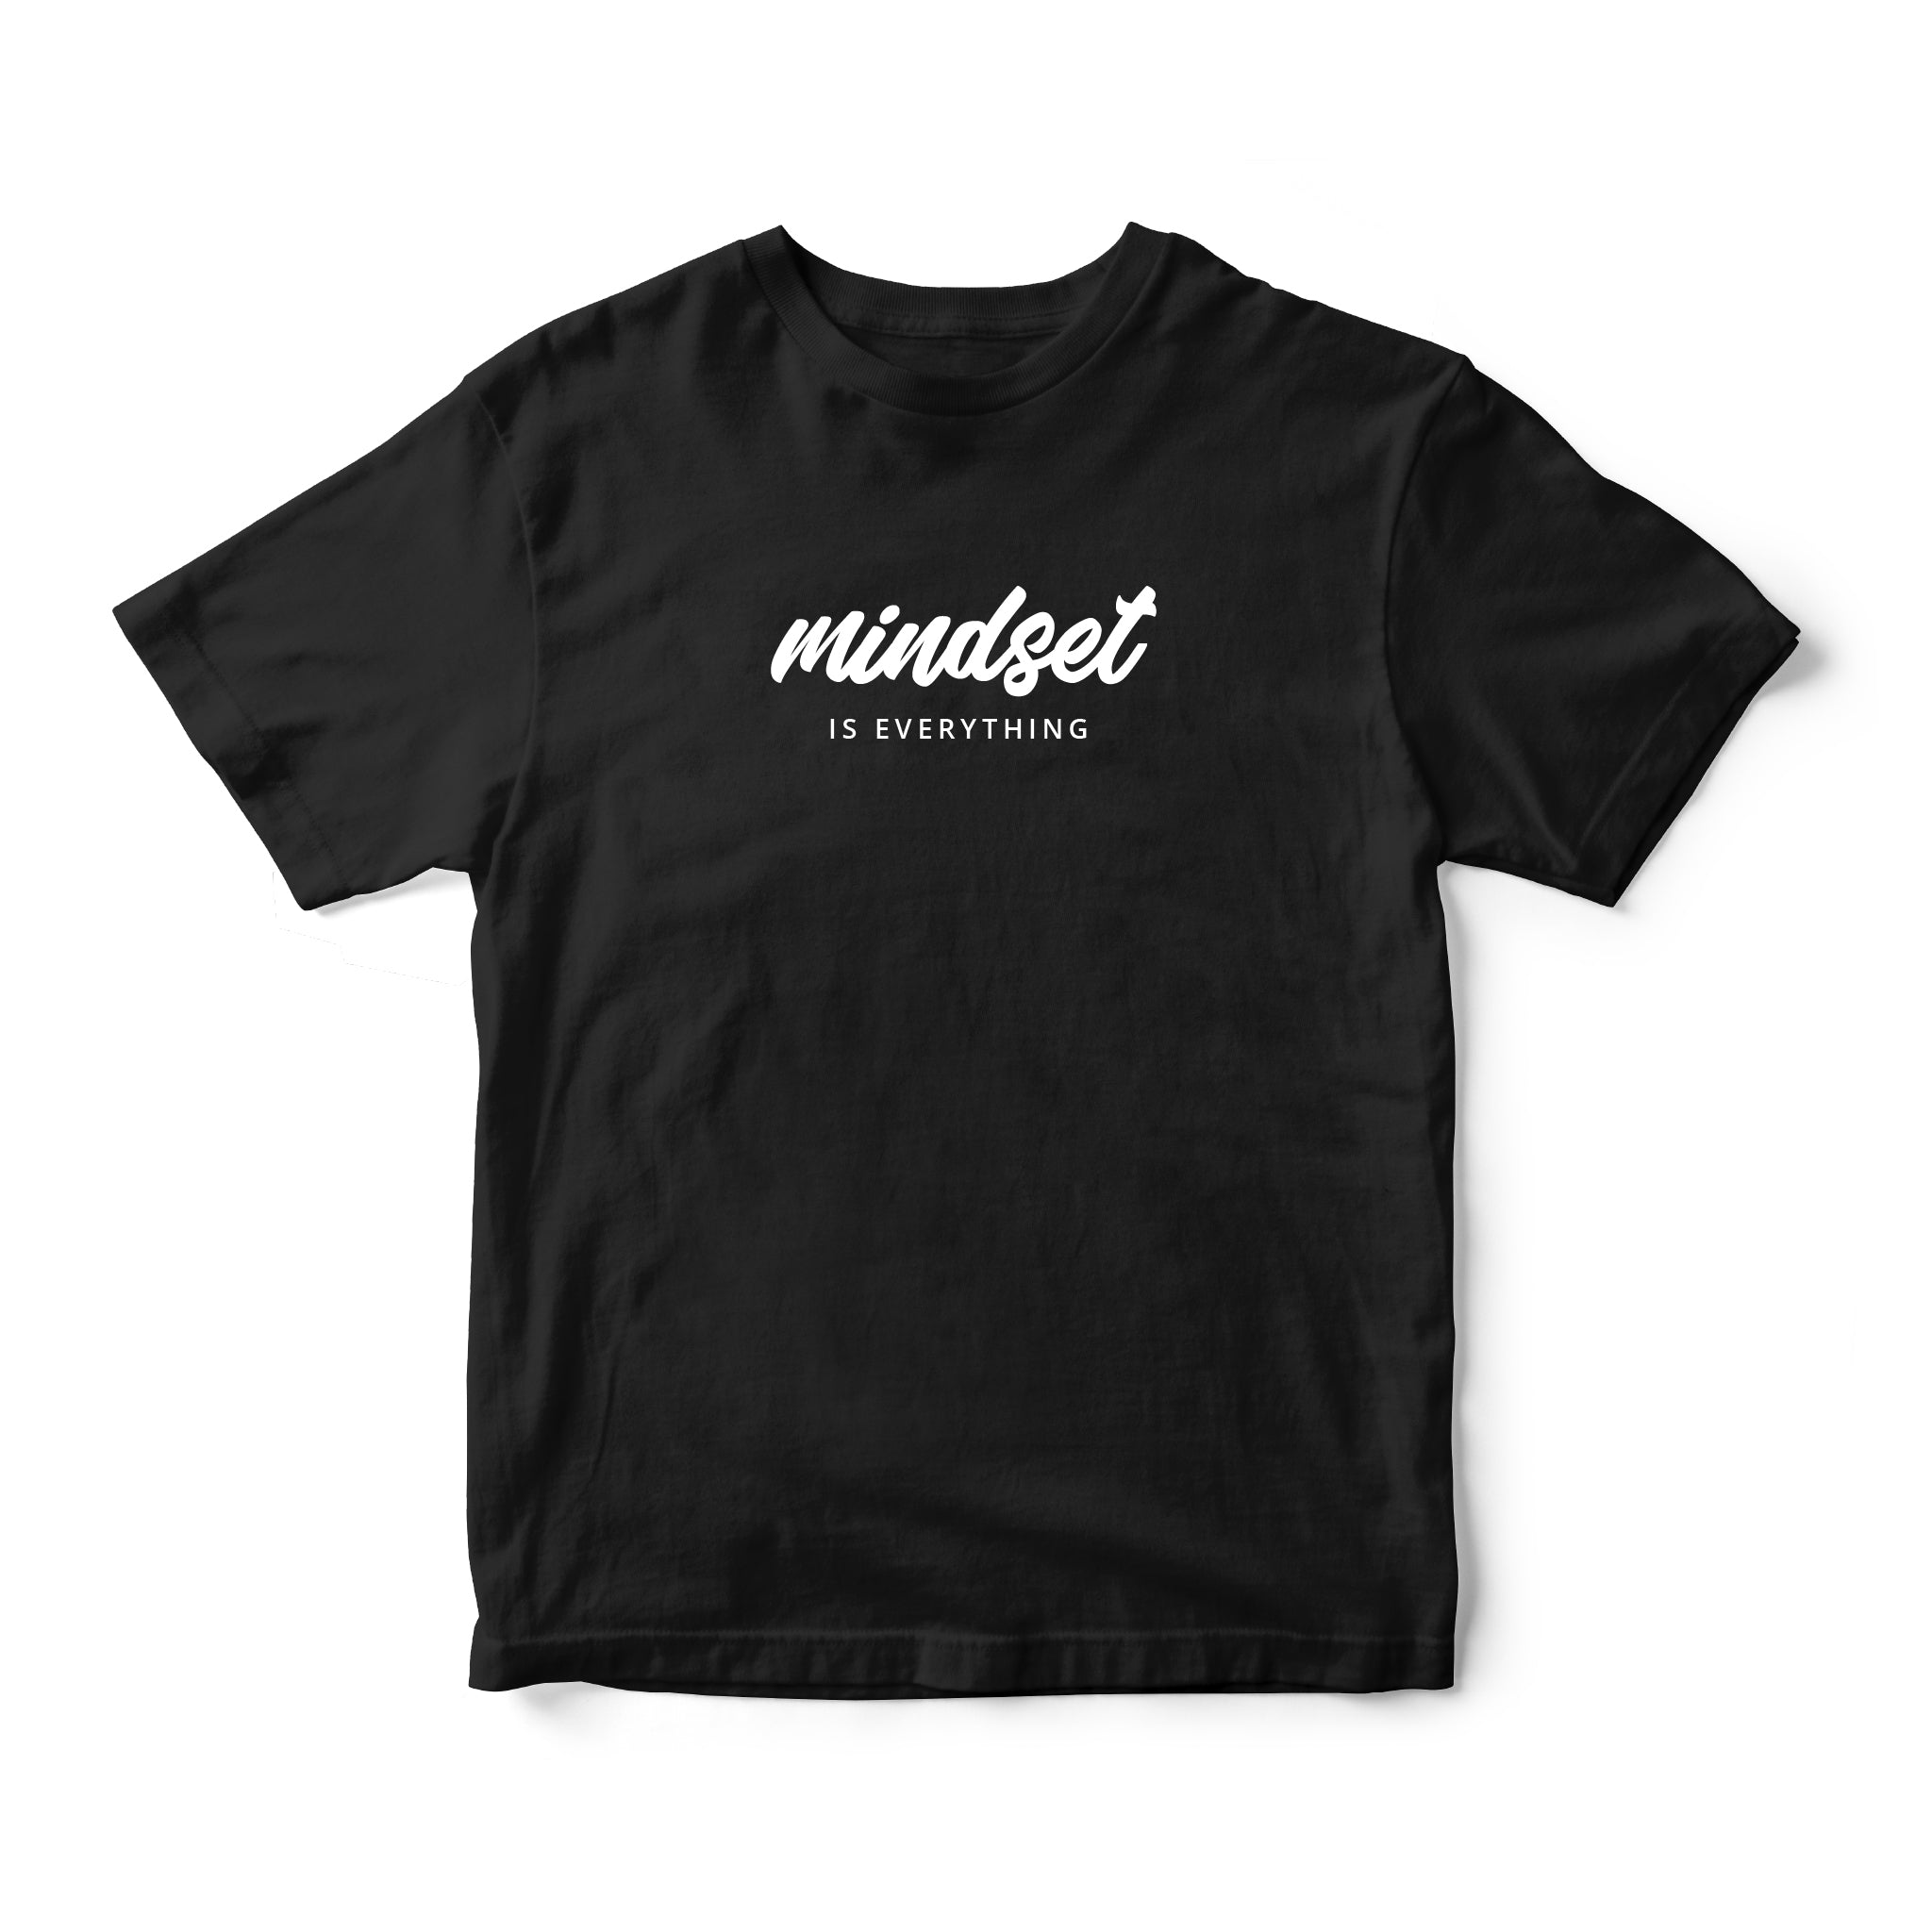 Instee Mindset Is Everything T-shirt Unisex 100% Cotton